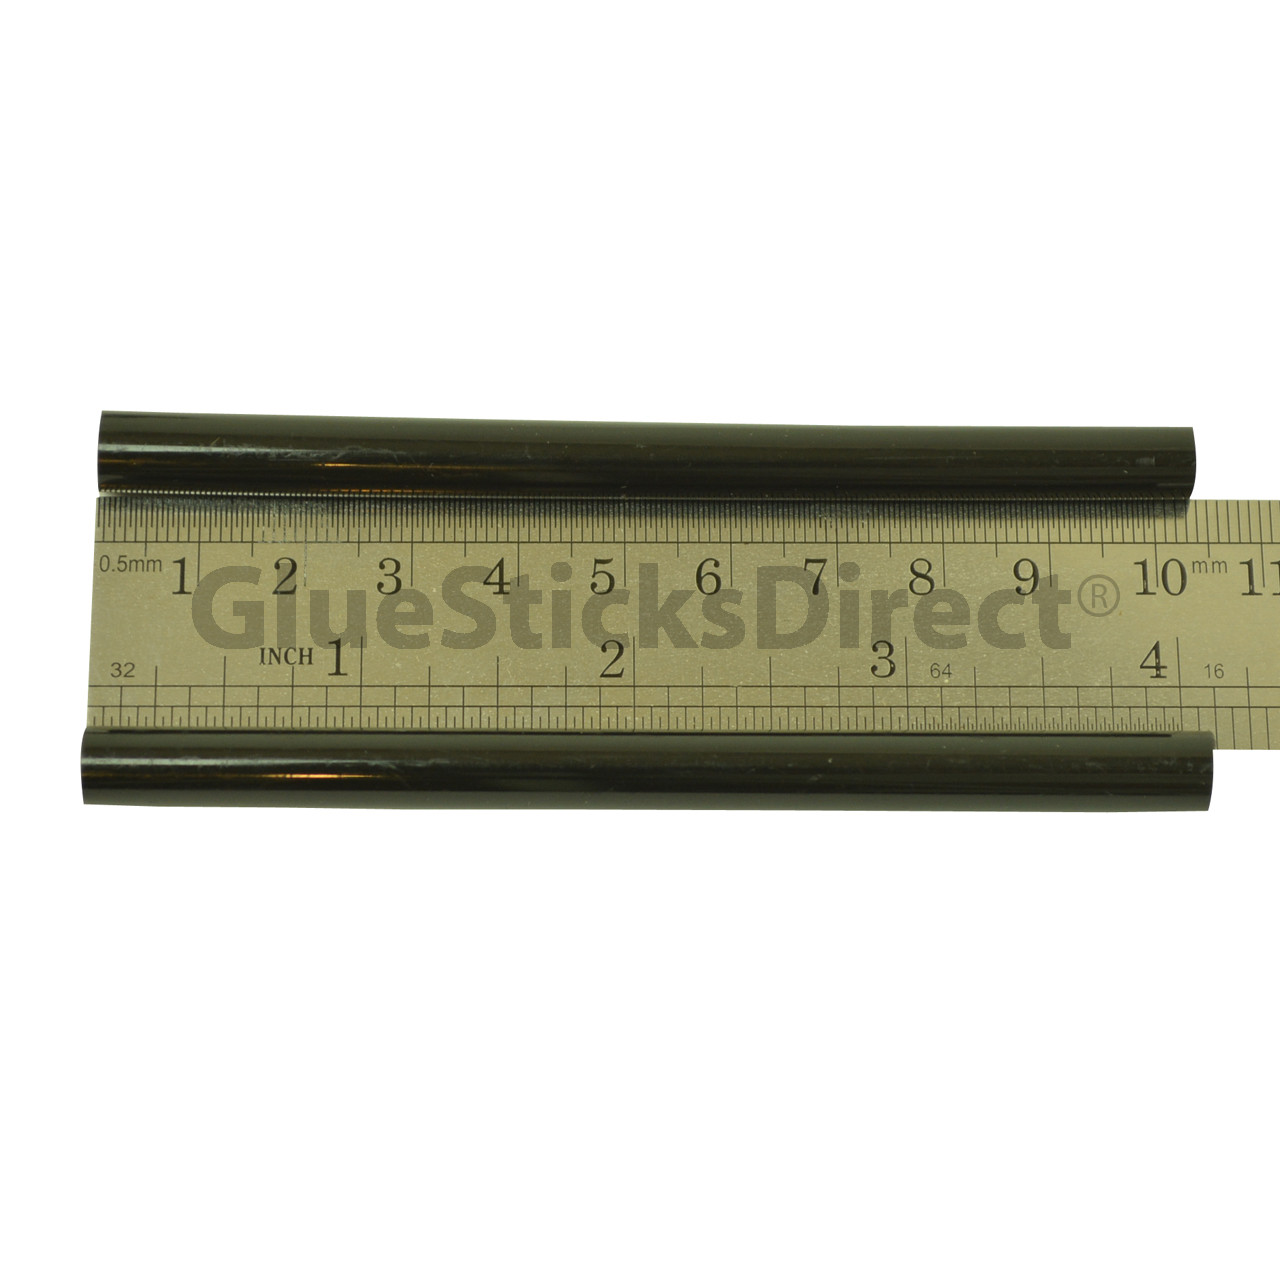 GlueSticksDirect Red Colored Glue Sticks mini X 4" 12 sticks 